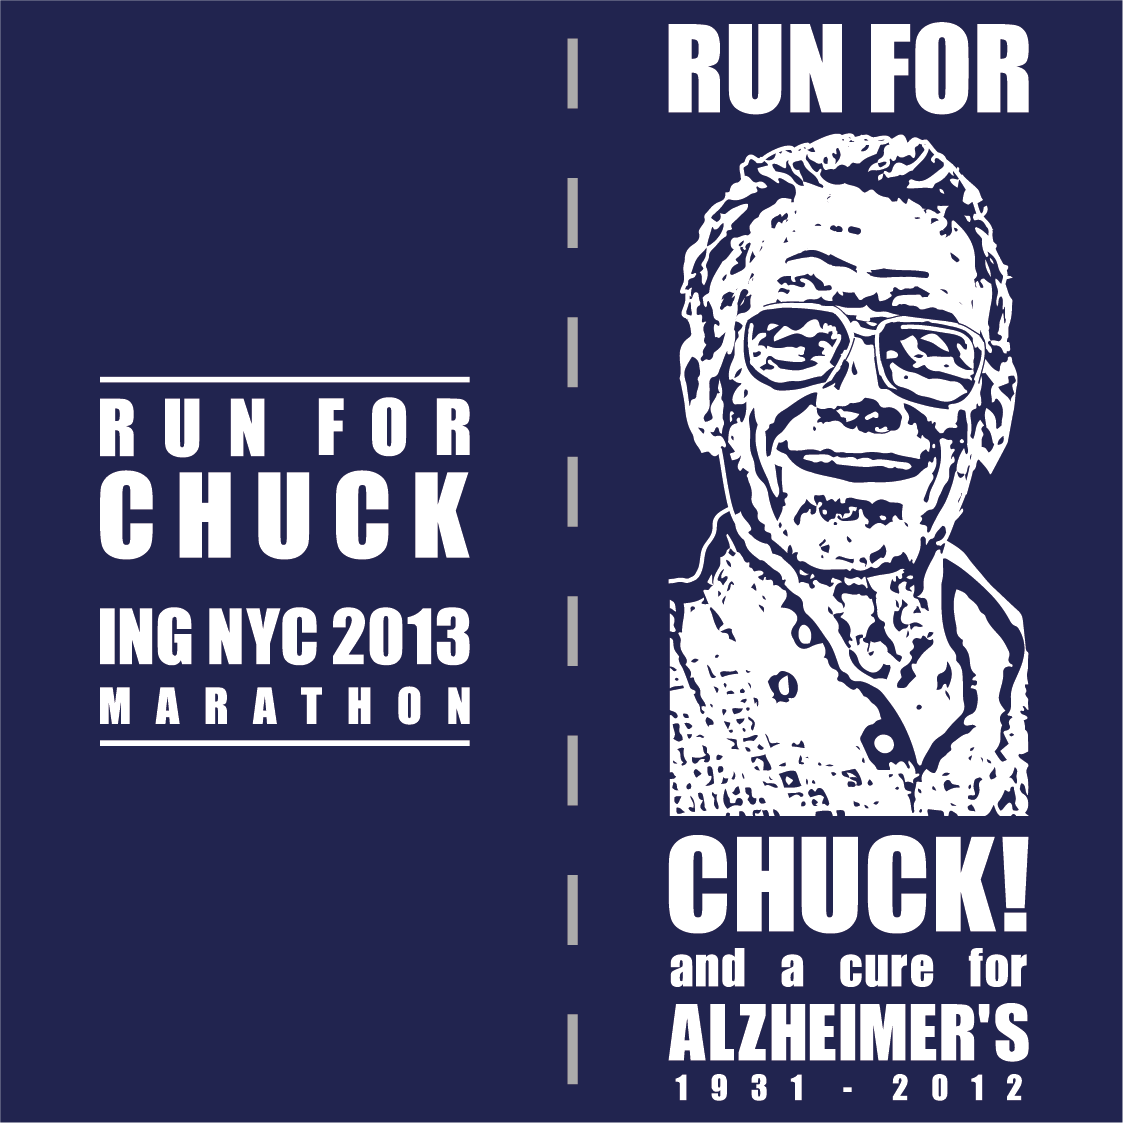 RUN FOR CHUCK! shirt design - zoomed